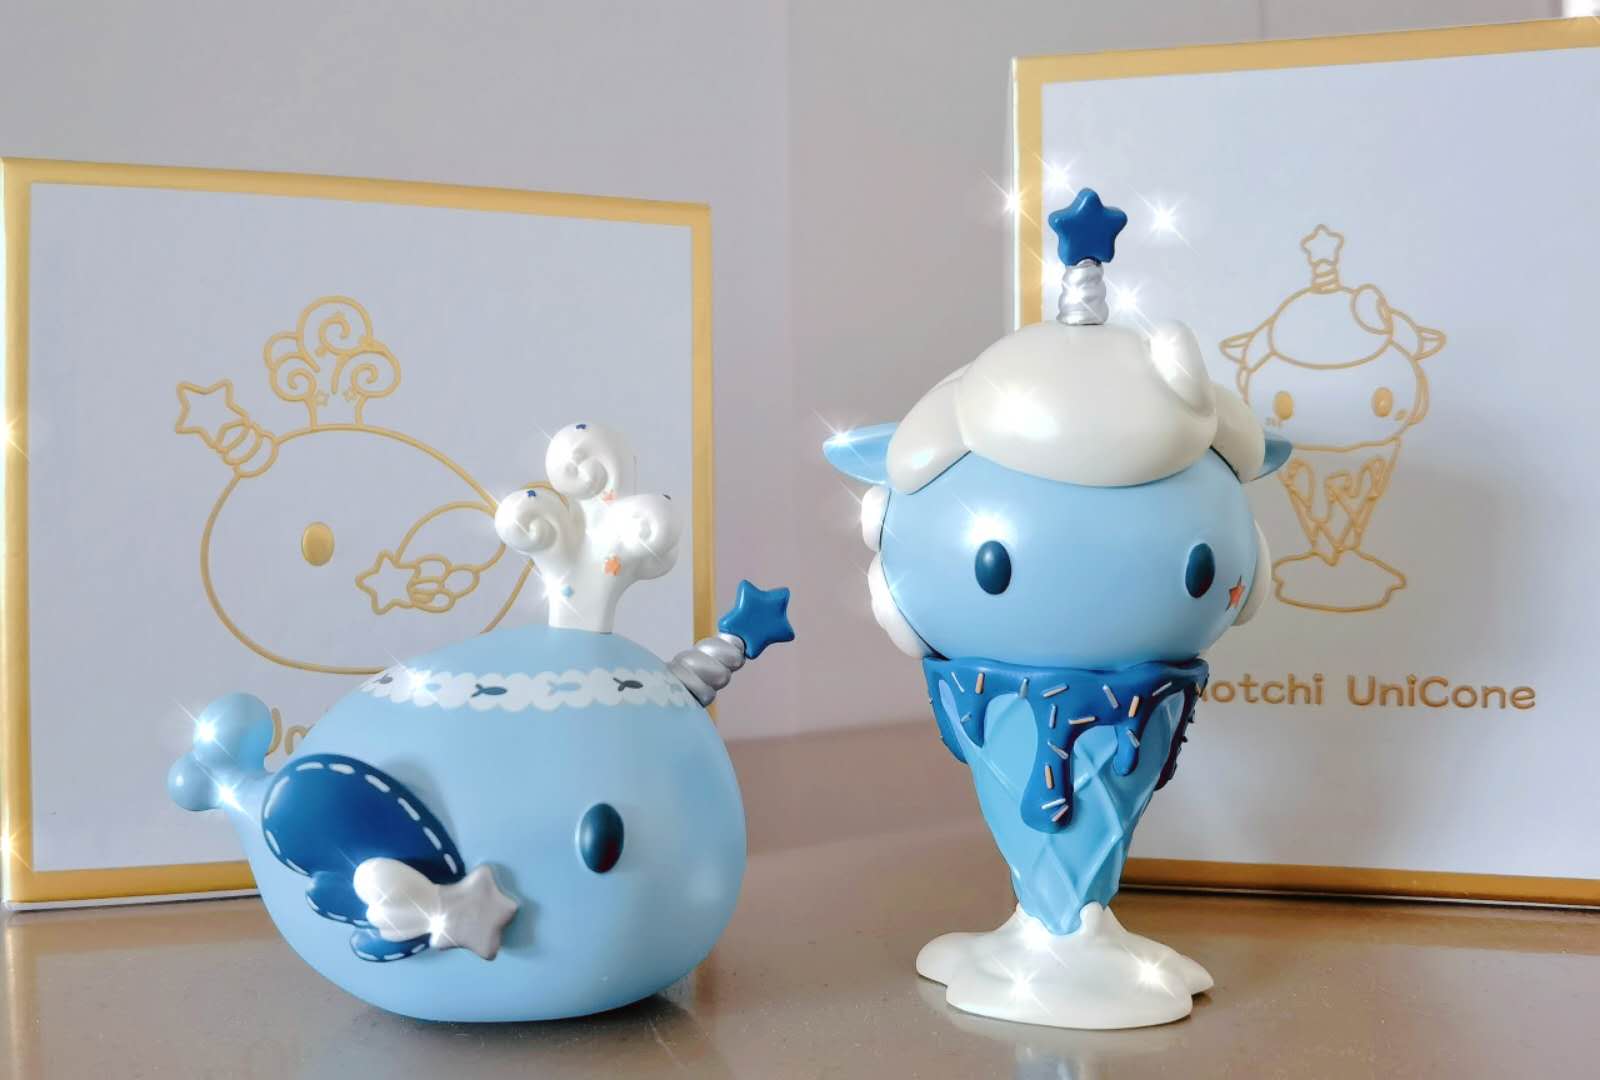 Sea Sweet Unicone by Motchi Toys